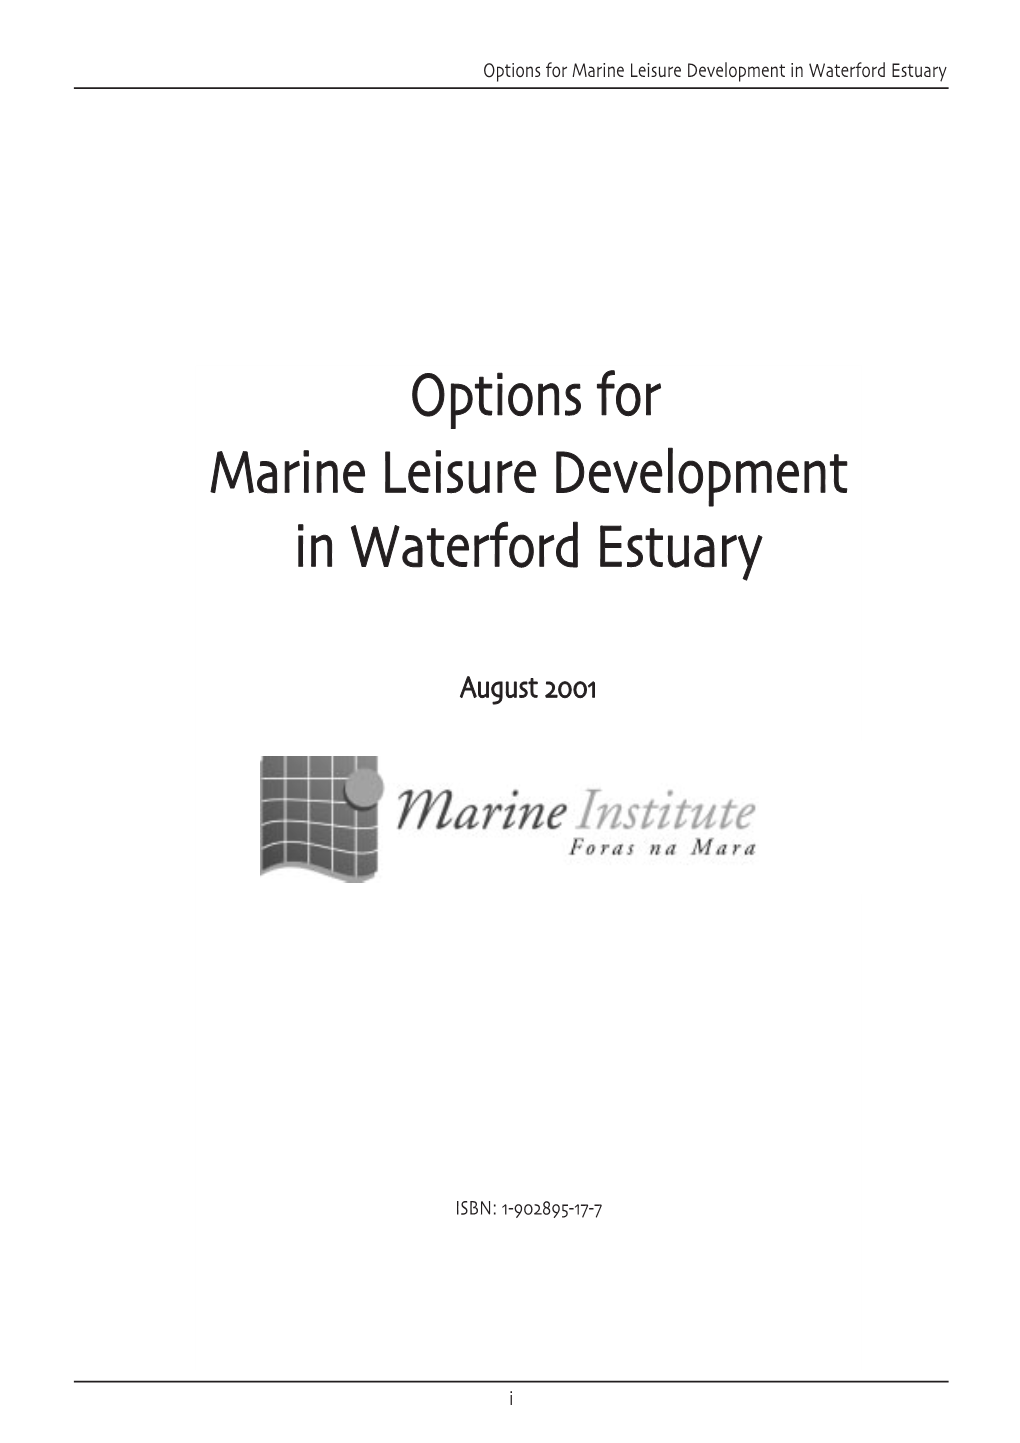 Waterford Estuary Case Study 2